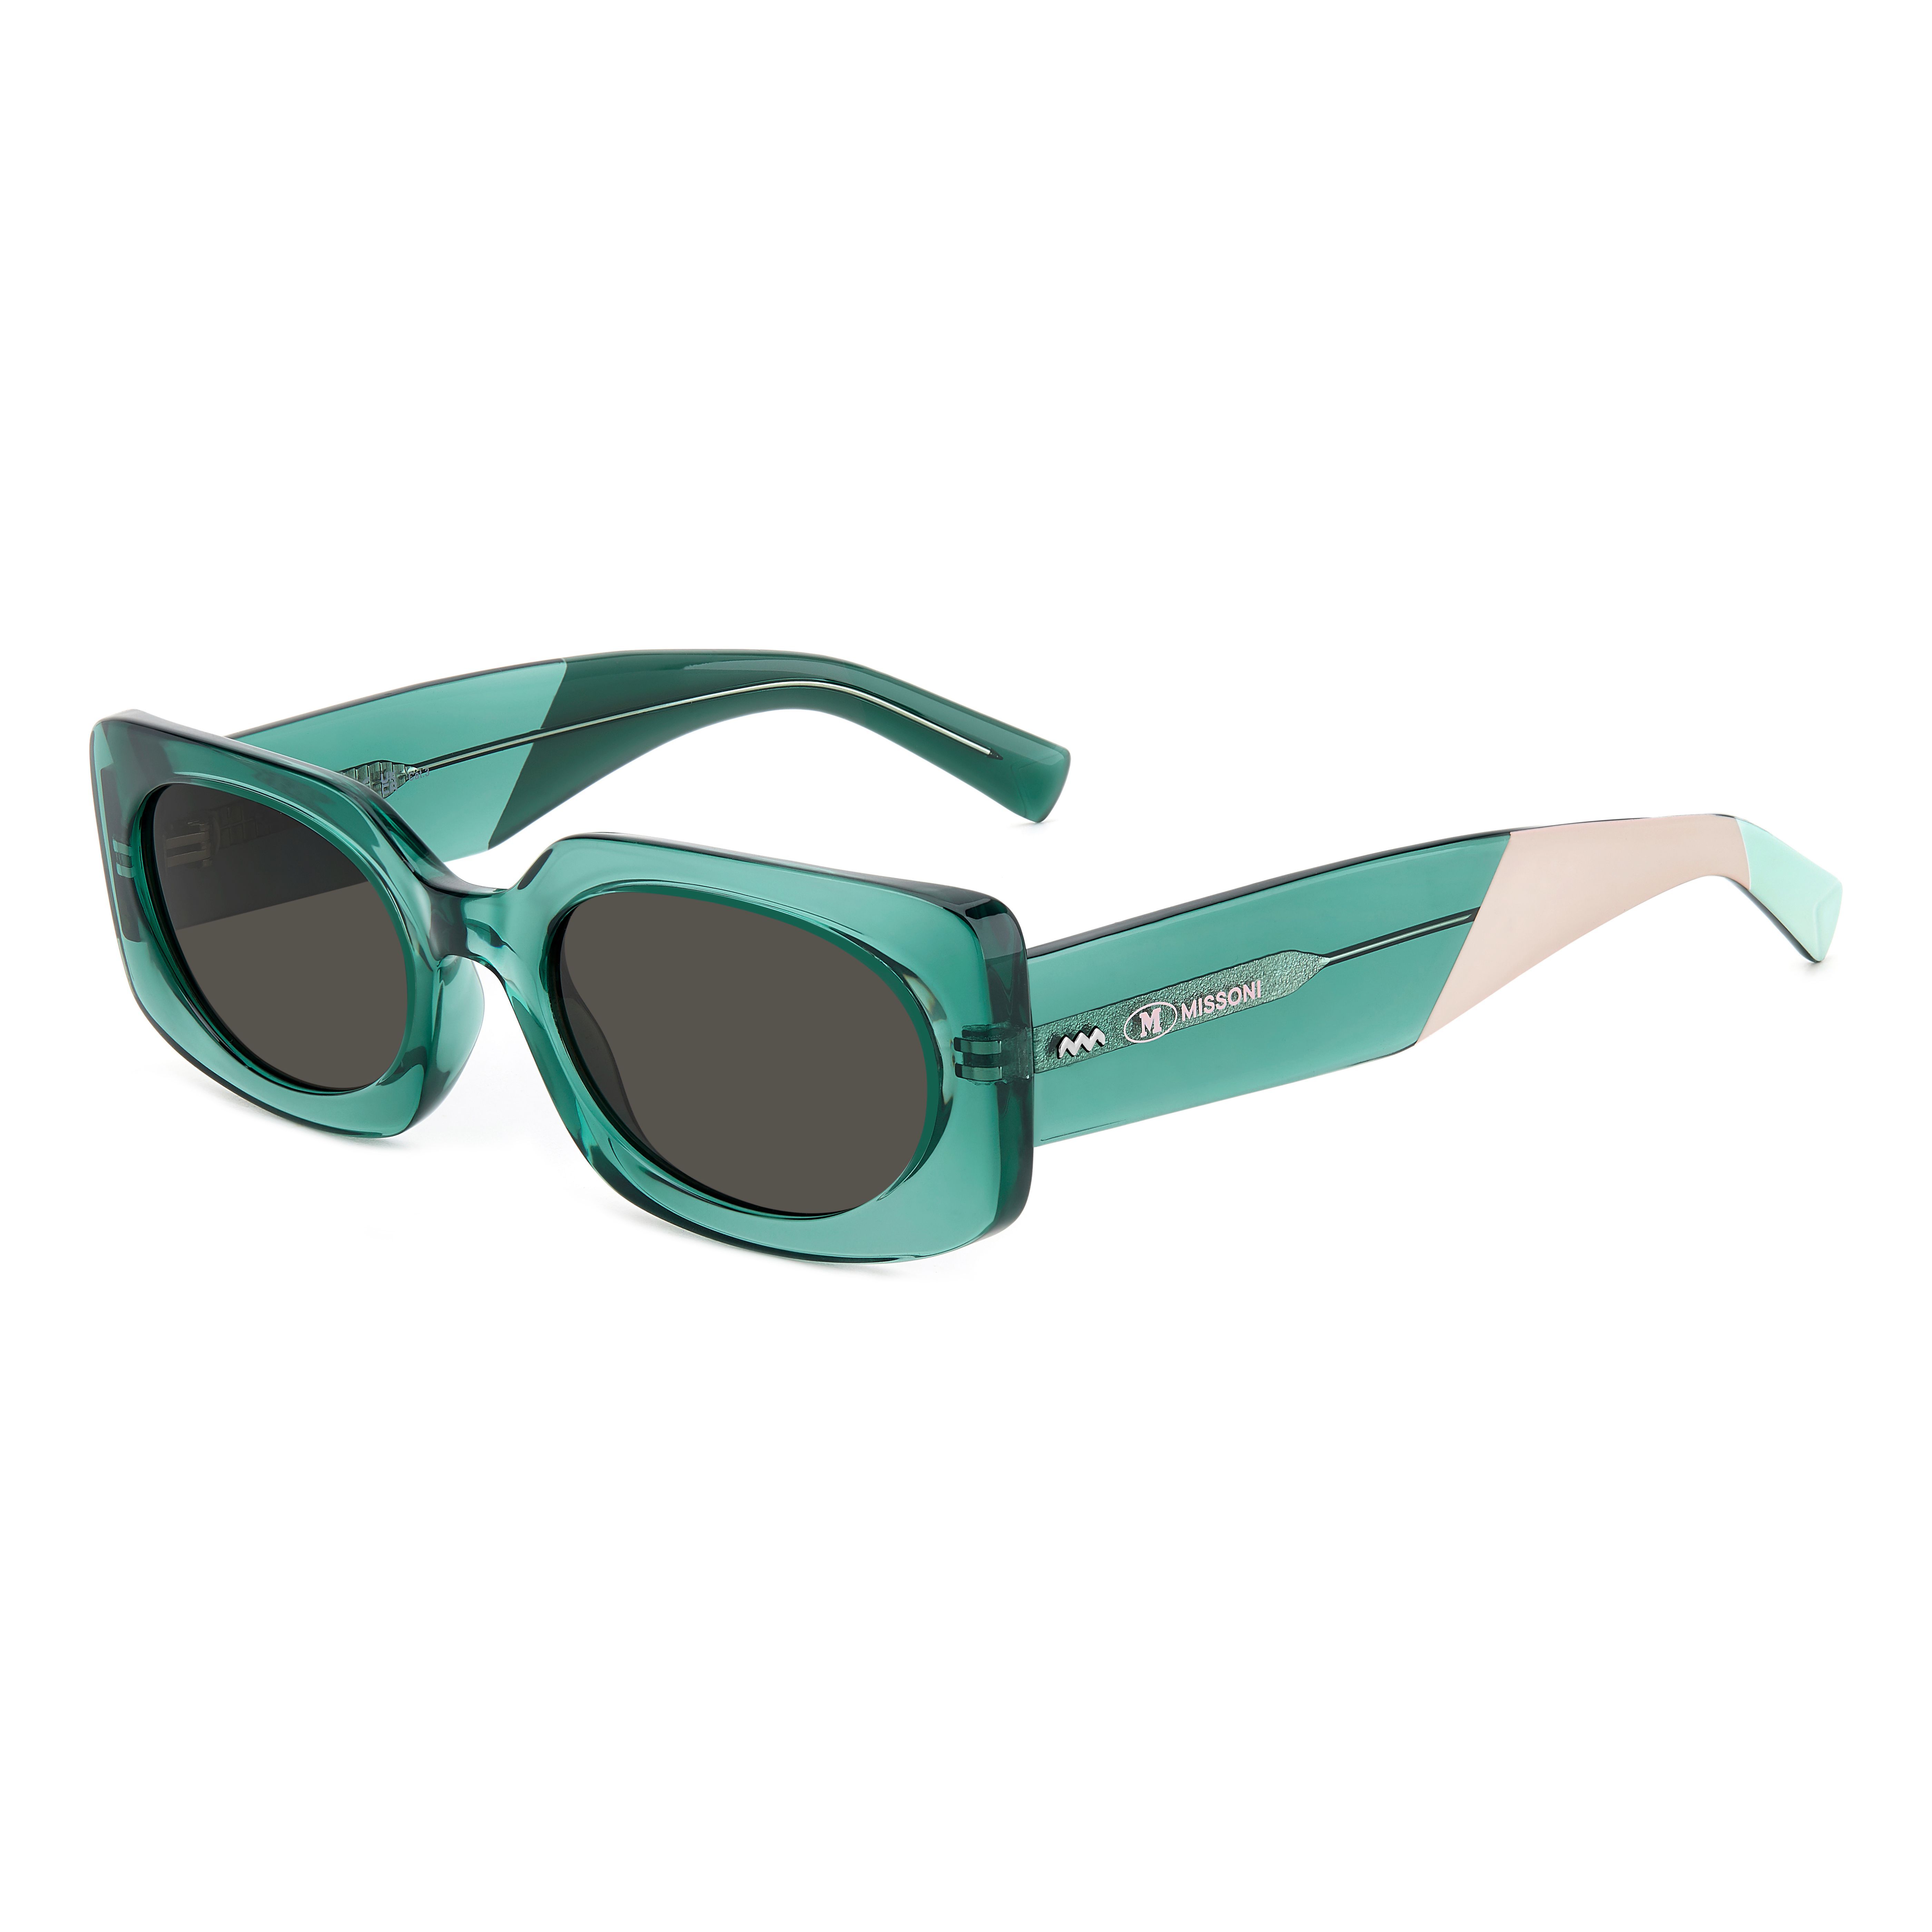 MMI 0169 S Rectangle Sunglasses 1EDIR - size 53